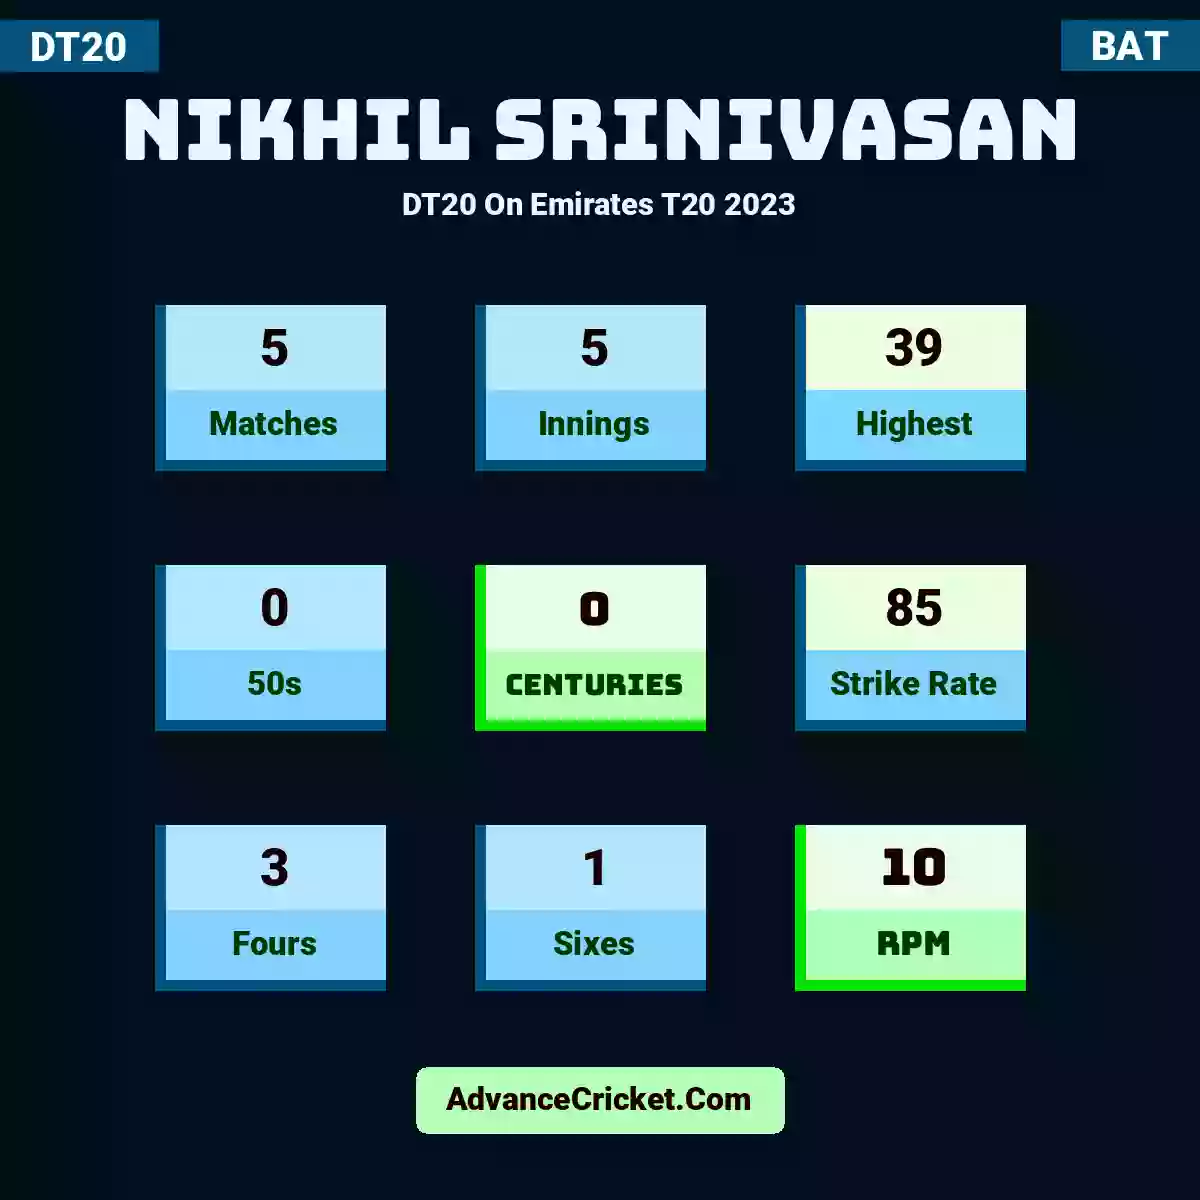 Nikhil Srinivasan DT20  On Emirates T20 2023, Nikhil Srinivasan played 5 matches, scored 39 runs as highest, 0 half-centuries, and 0 centuries, with a strike rate of 85. N.Srinivasan hit 3 fours and 1 sixes, with an RPM of 10.